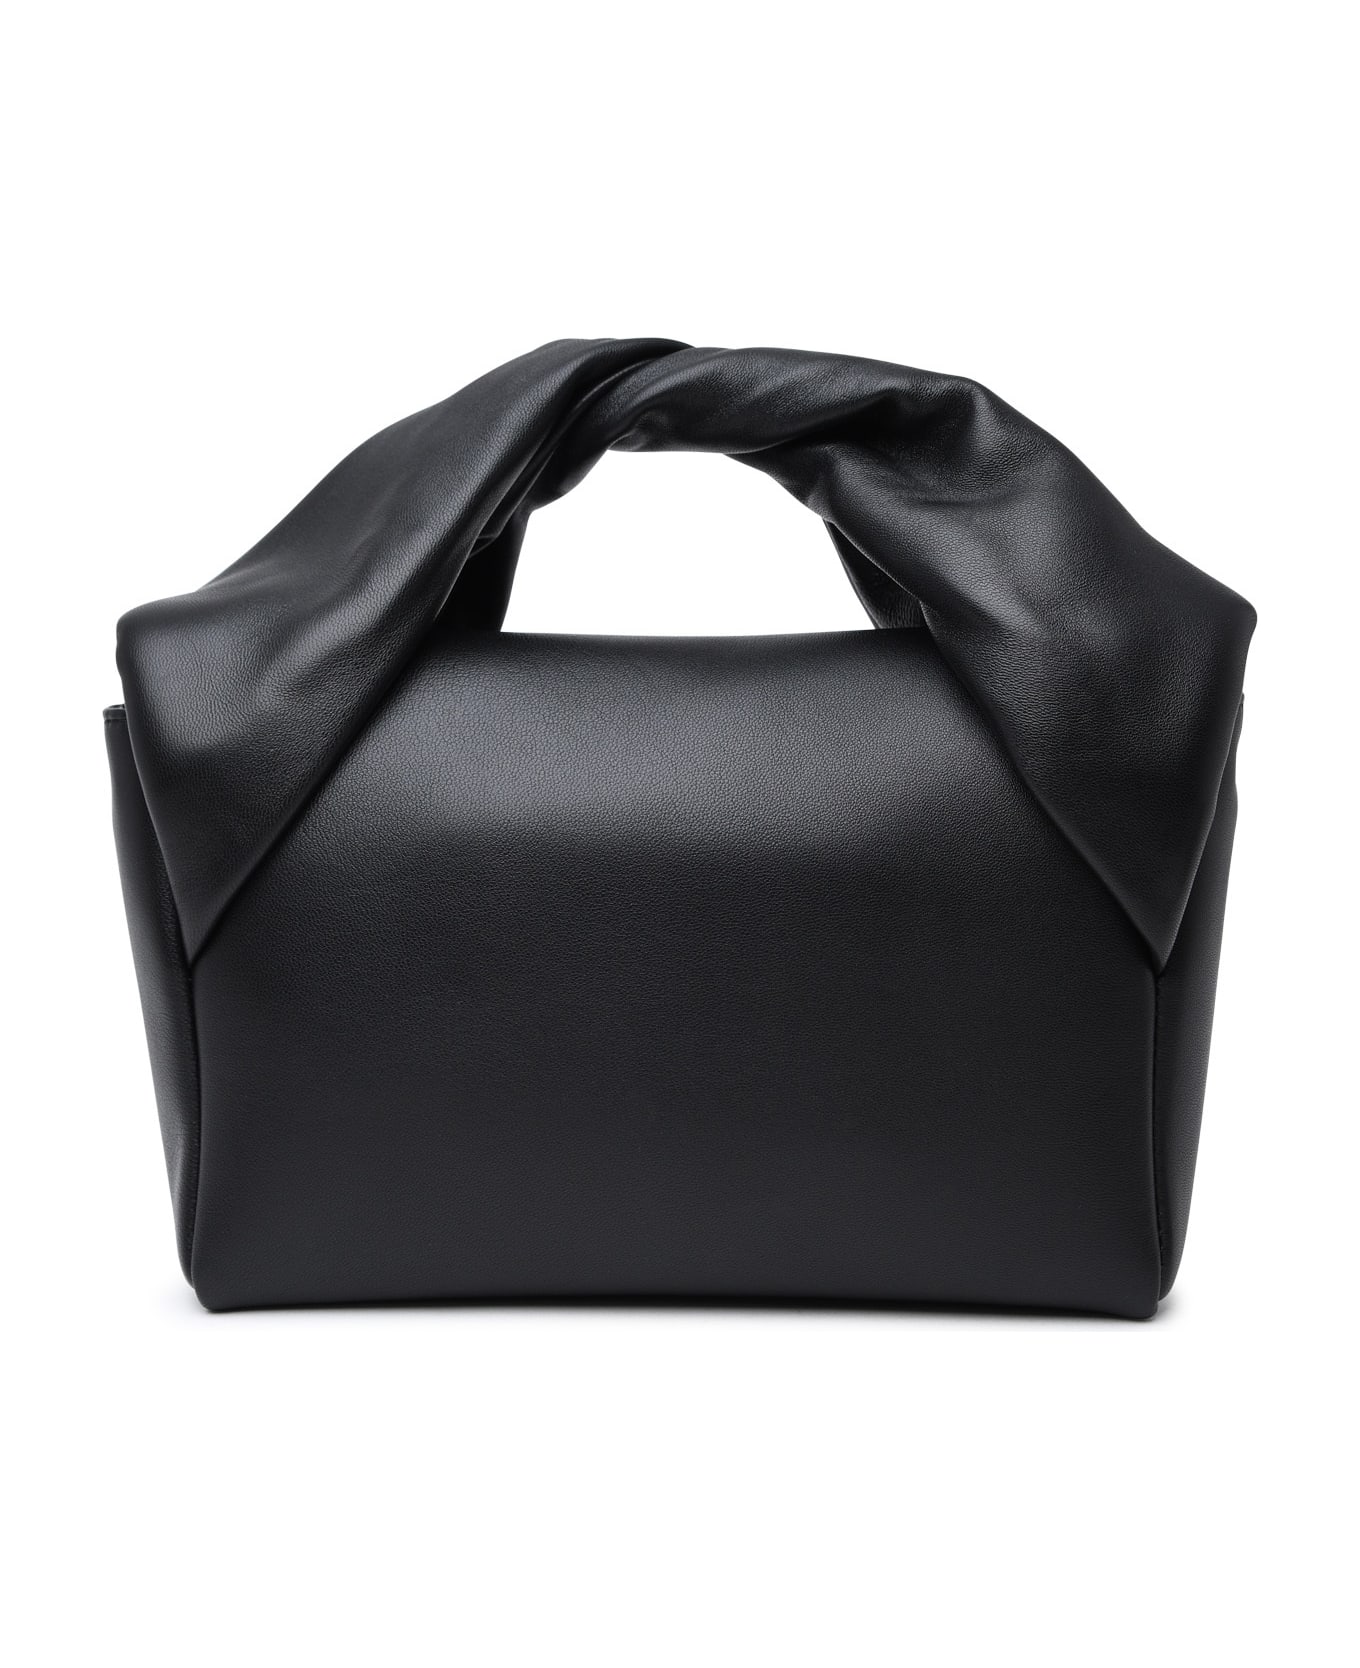 J.W. Anderson Black Leather Twister Large Bag - Black トートバッグ